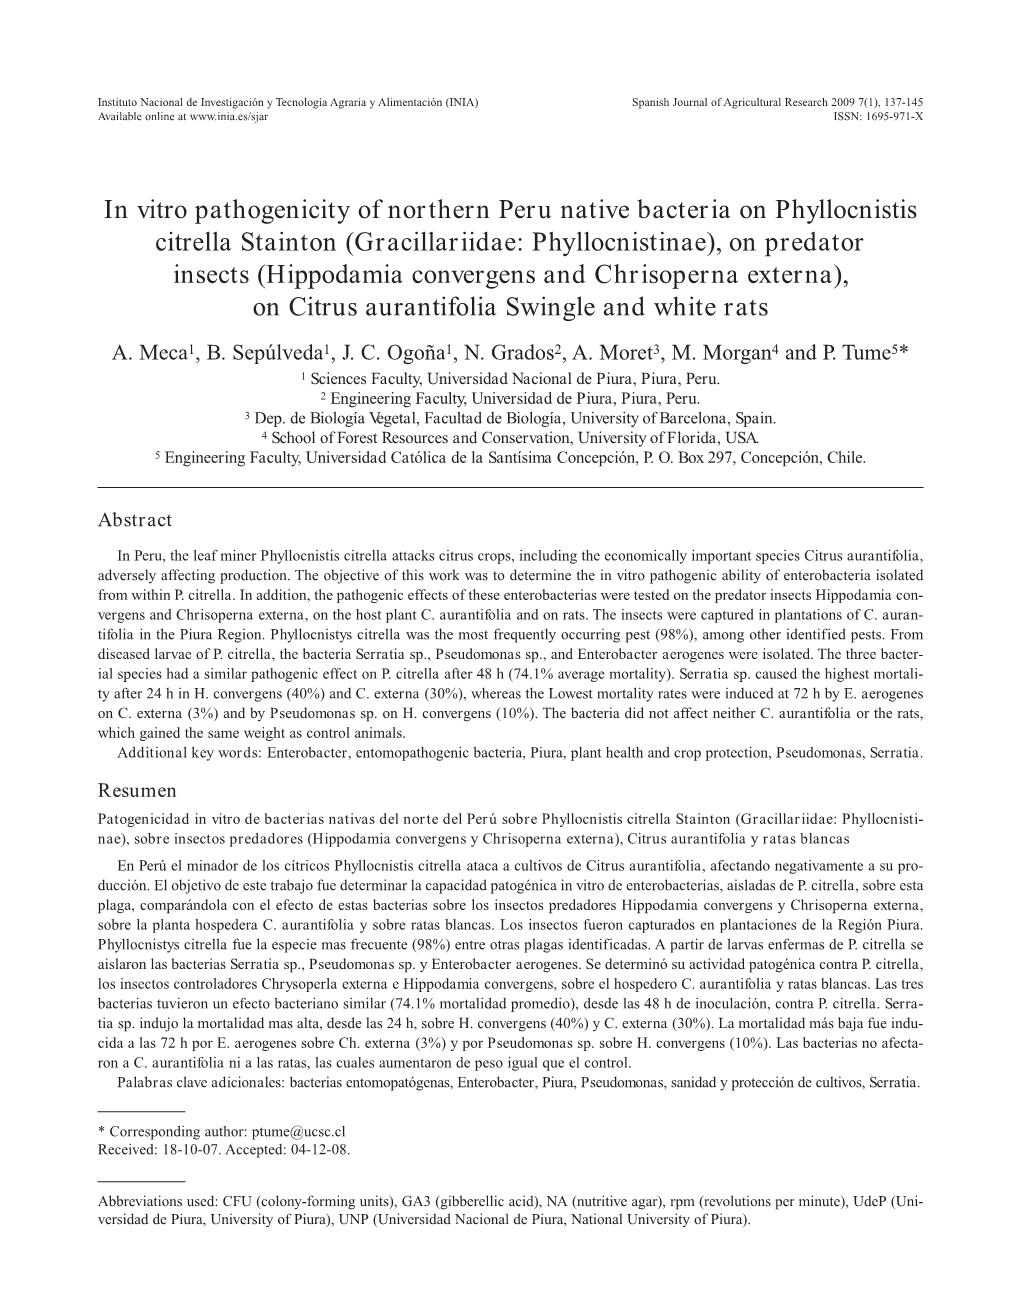 In Vitro Pathogenicity of Northern Peru Native Bacteria on Phyllocnistis